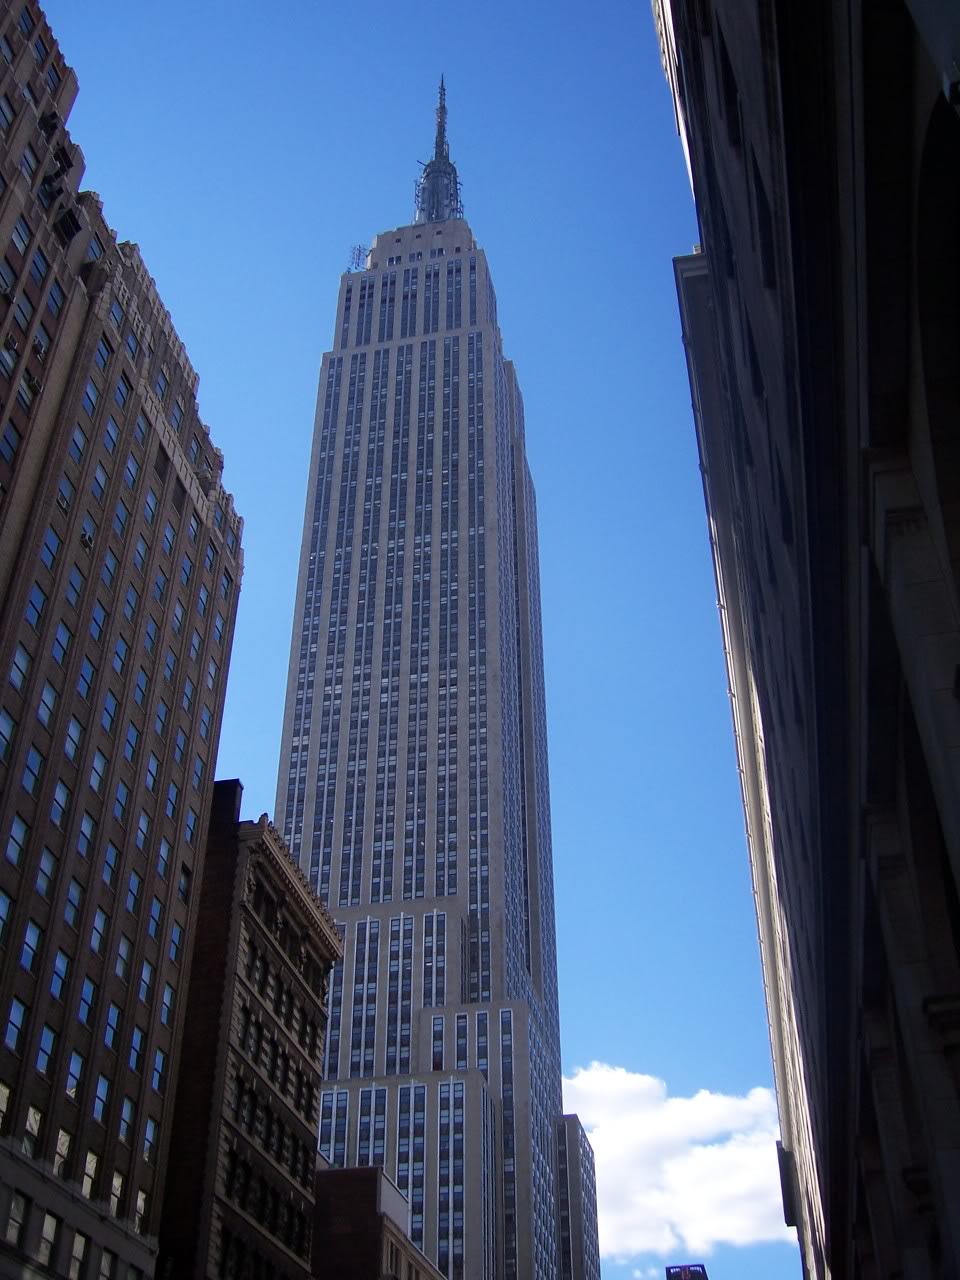 empire state building The Empire State Building in New York City